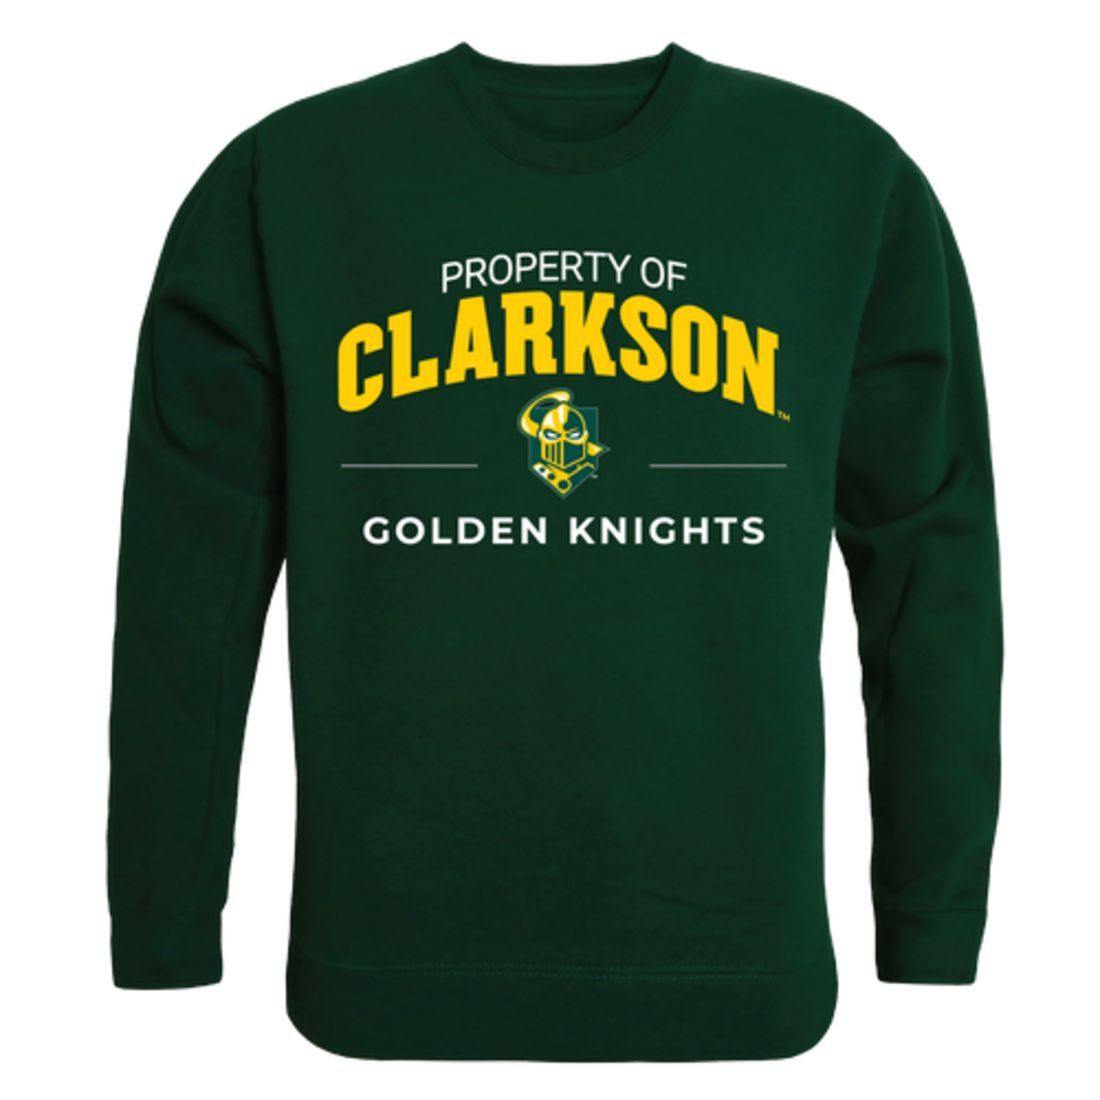 Clarkson University Golden Knights Property Crewneck Pullover Sweatshirt Sweater Forest-Campus-Wardrobe